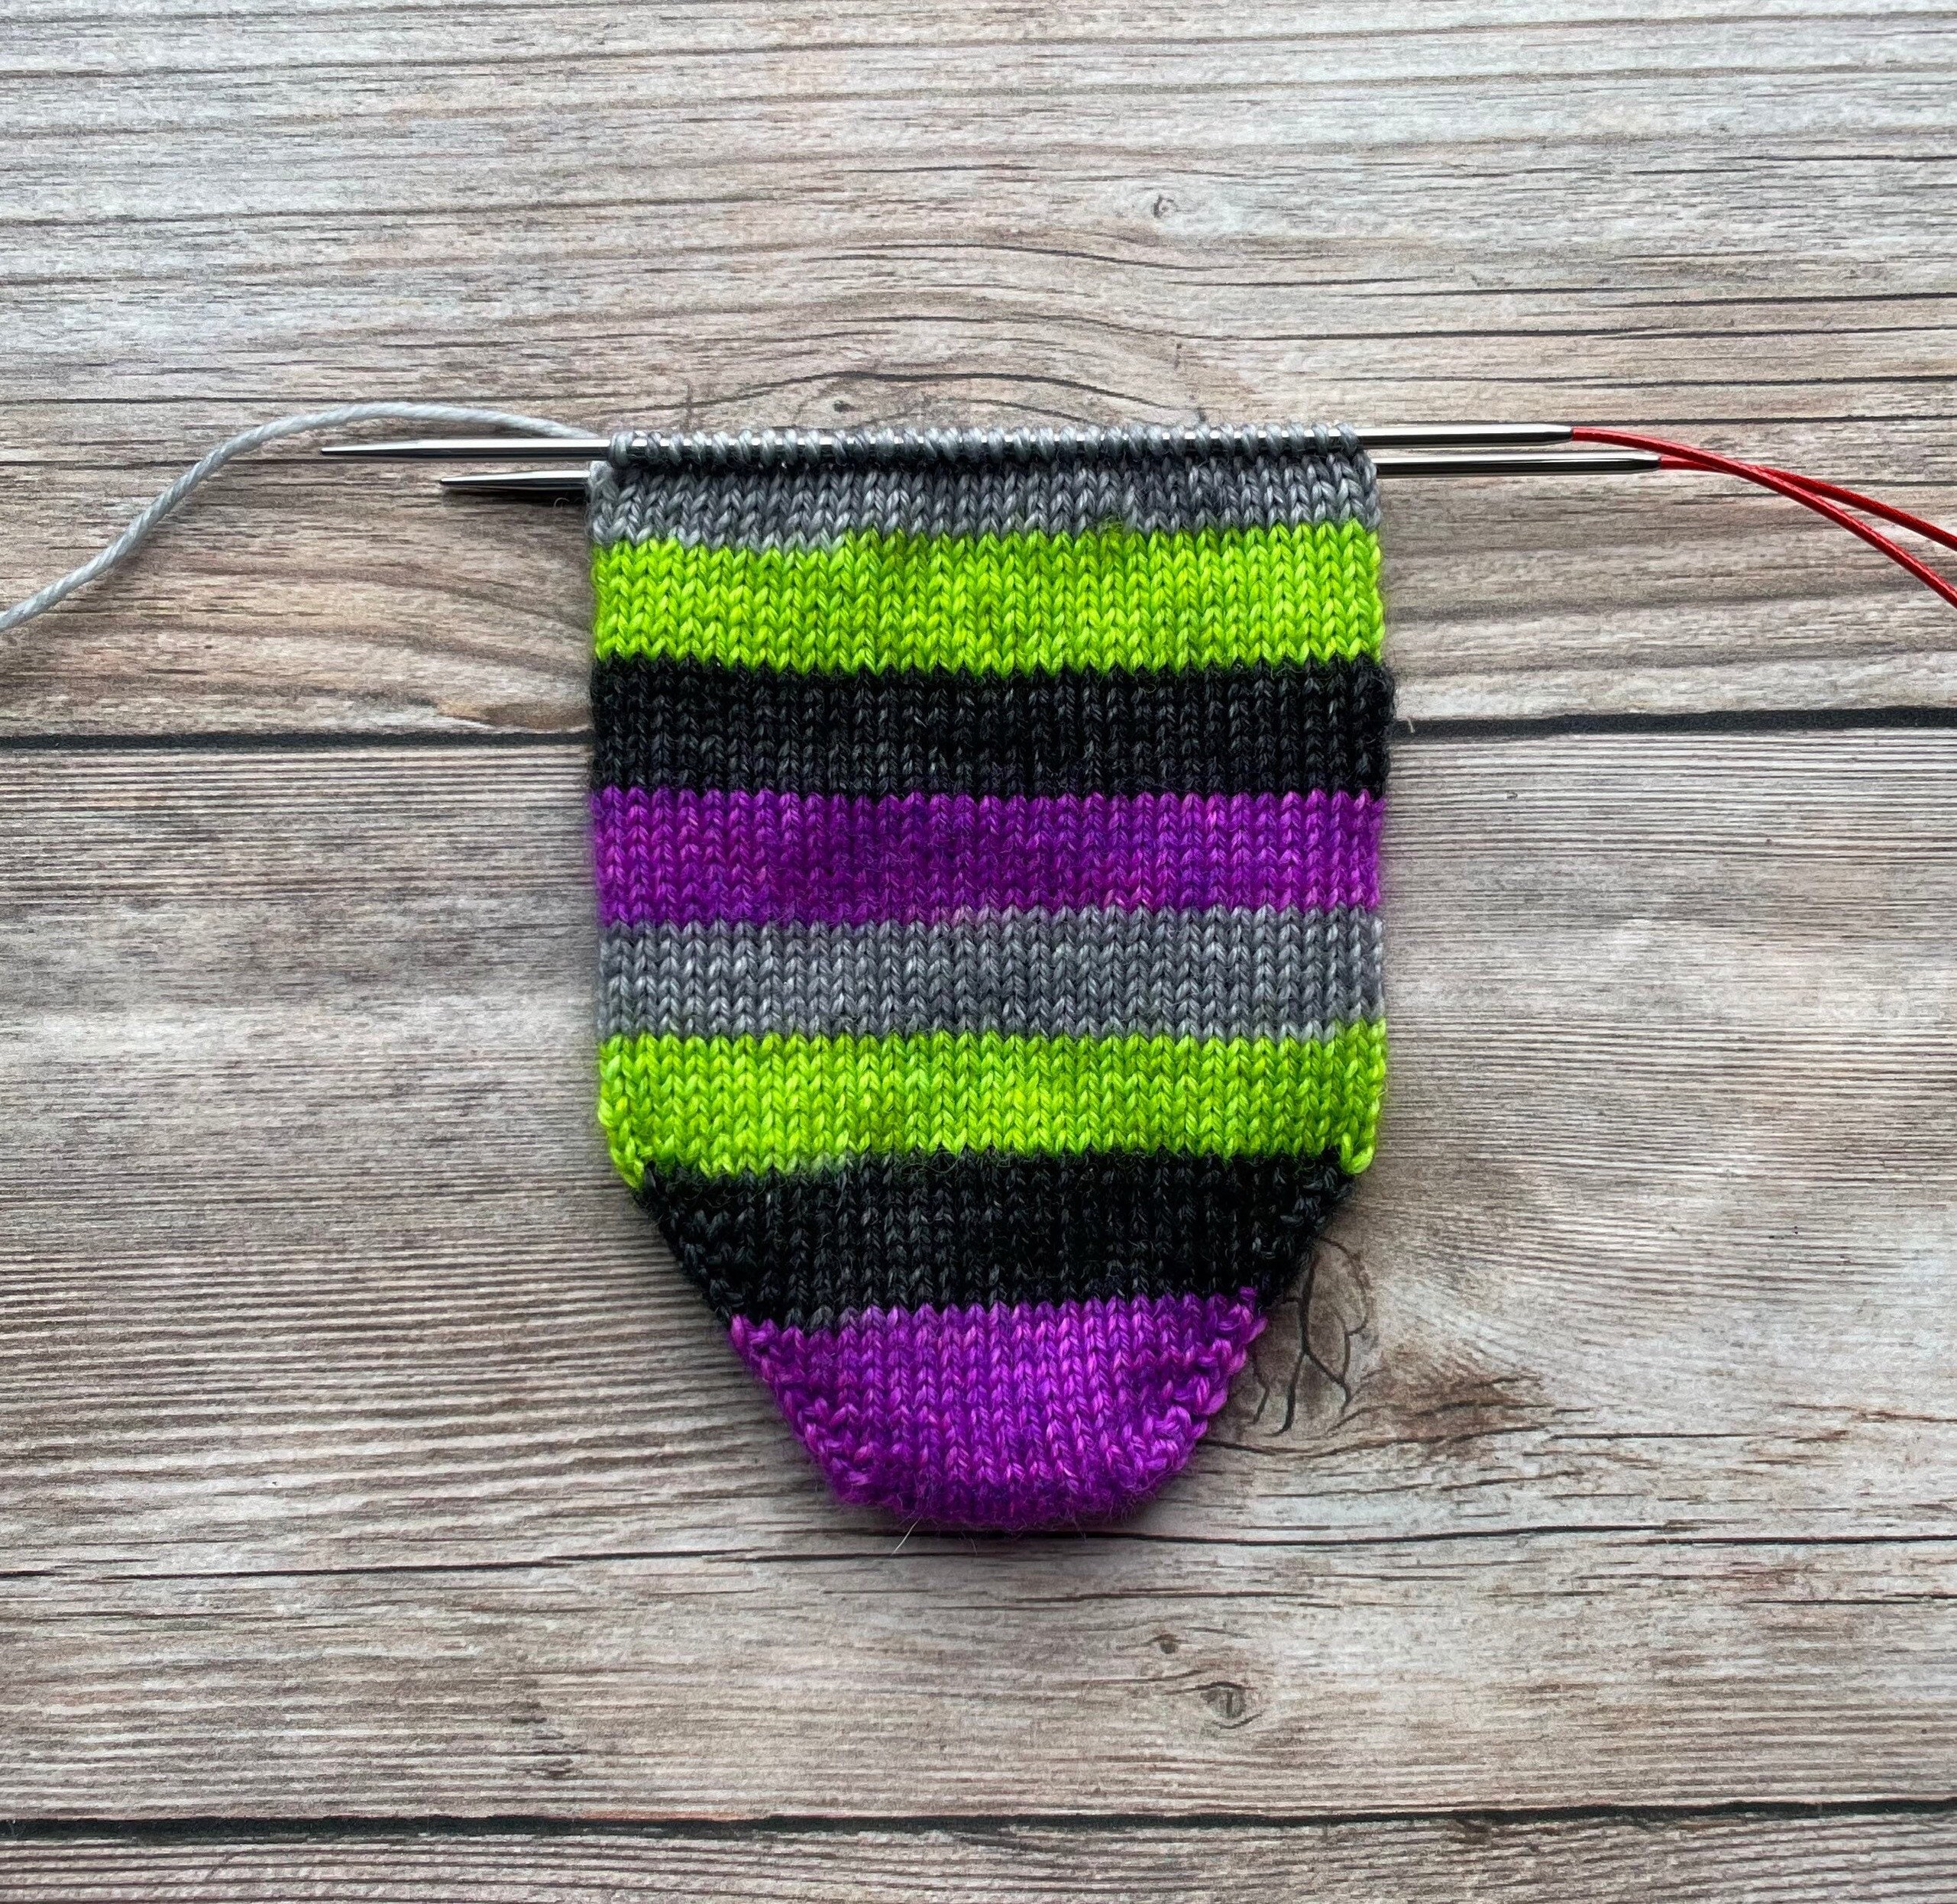 Vibrant Acrylic Yarn Skeins - 438 Yards - Crochet and Knitting Starter Kit